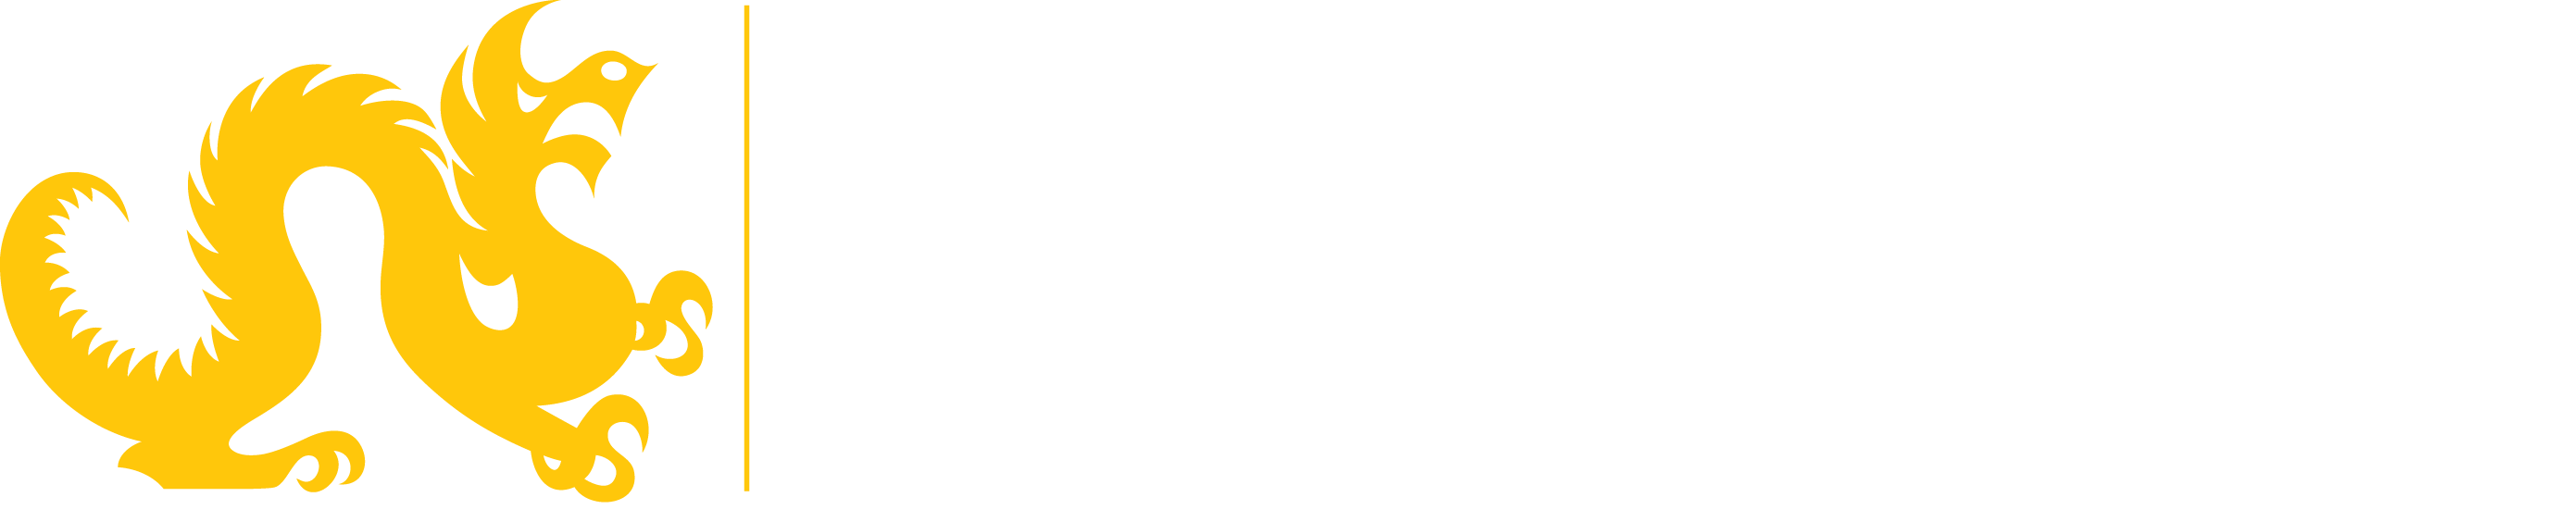 Digital Media Research Blog